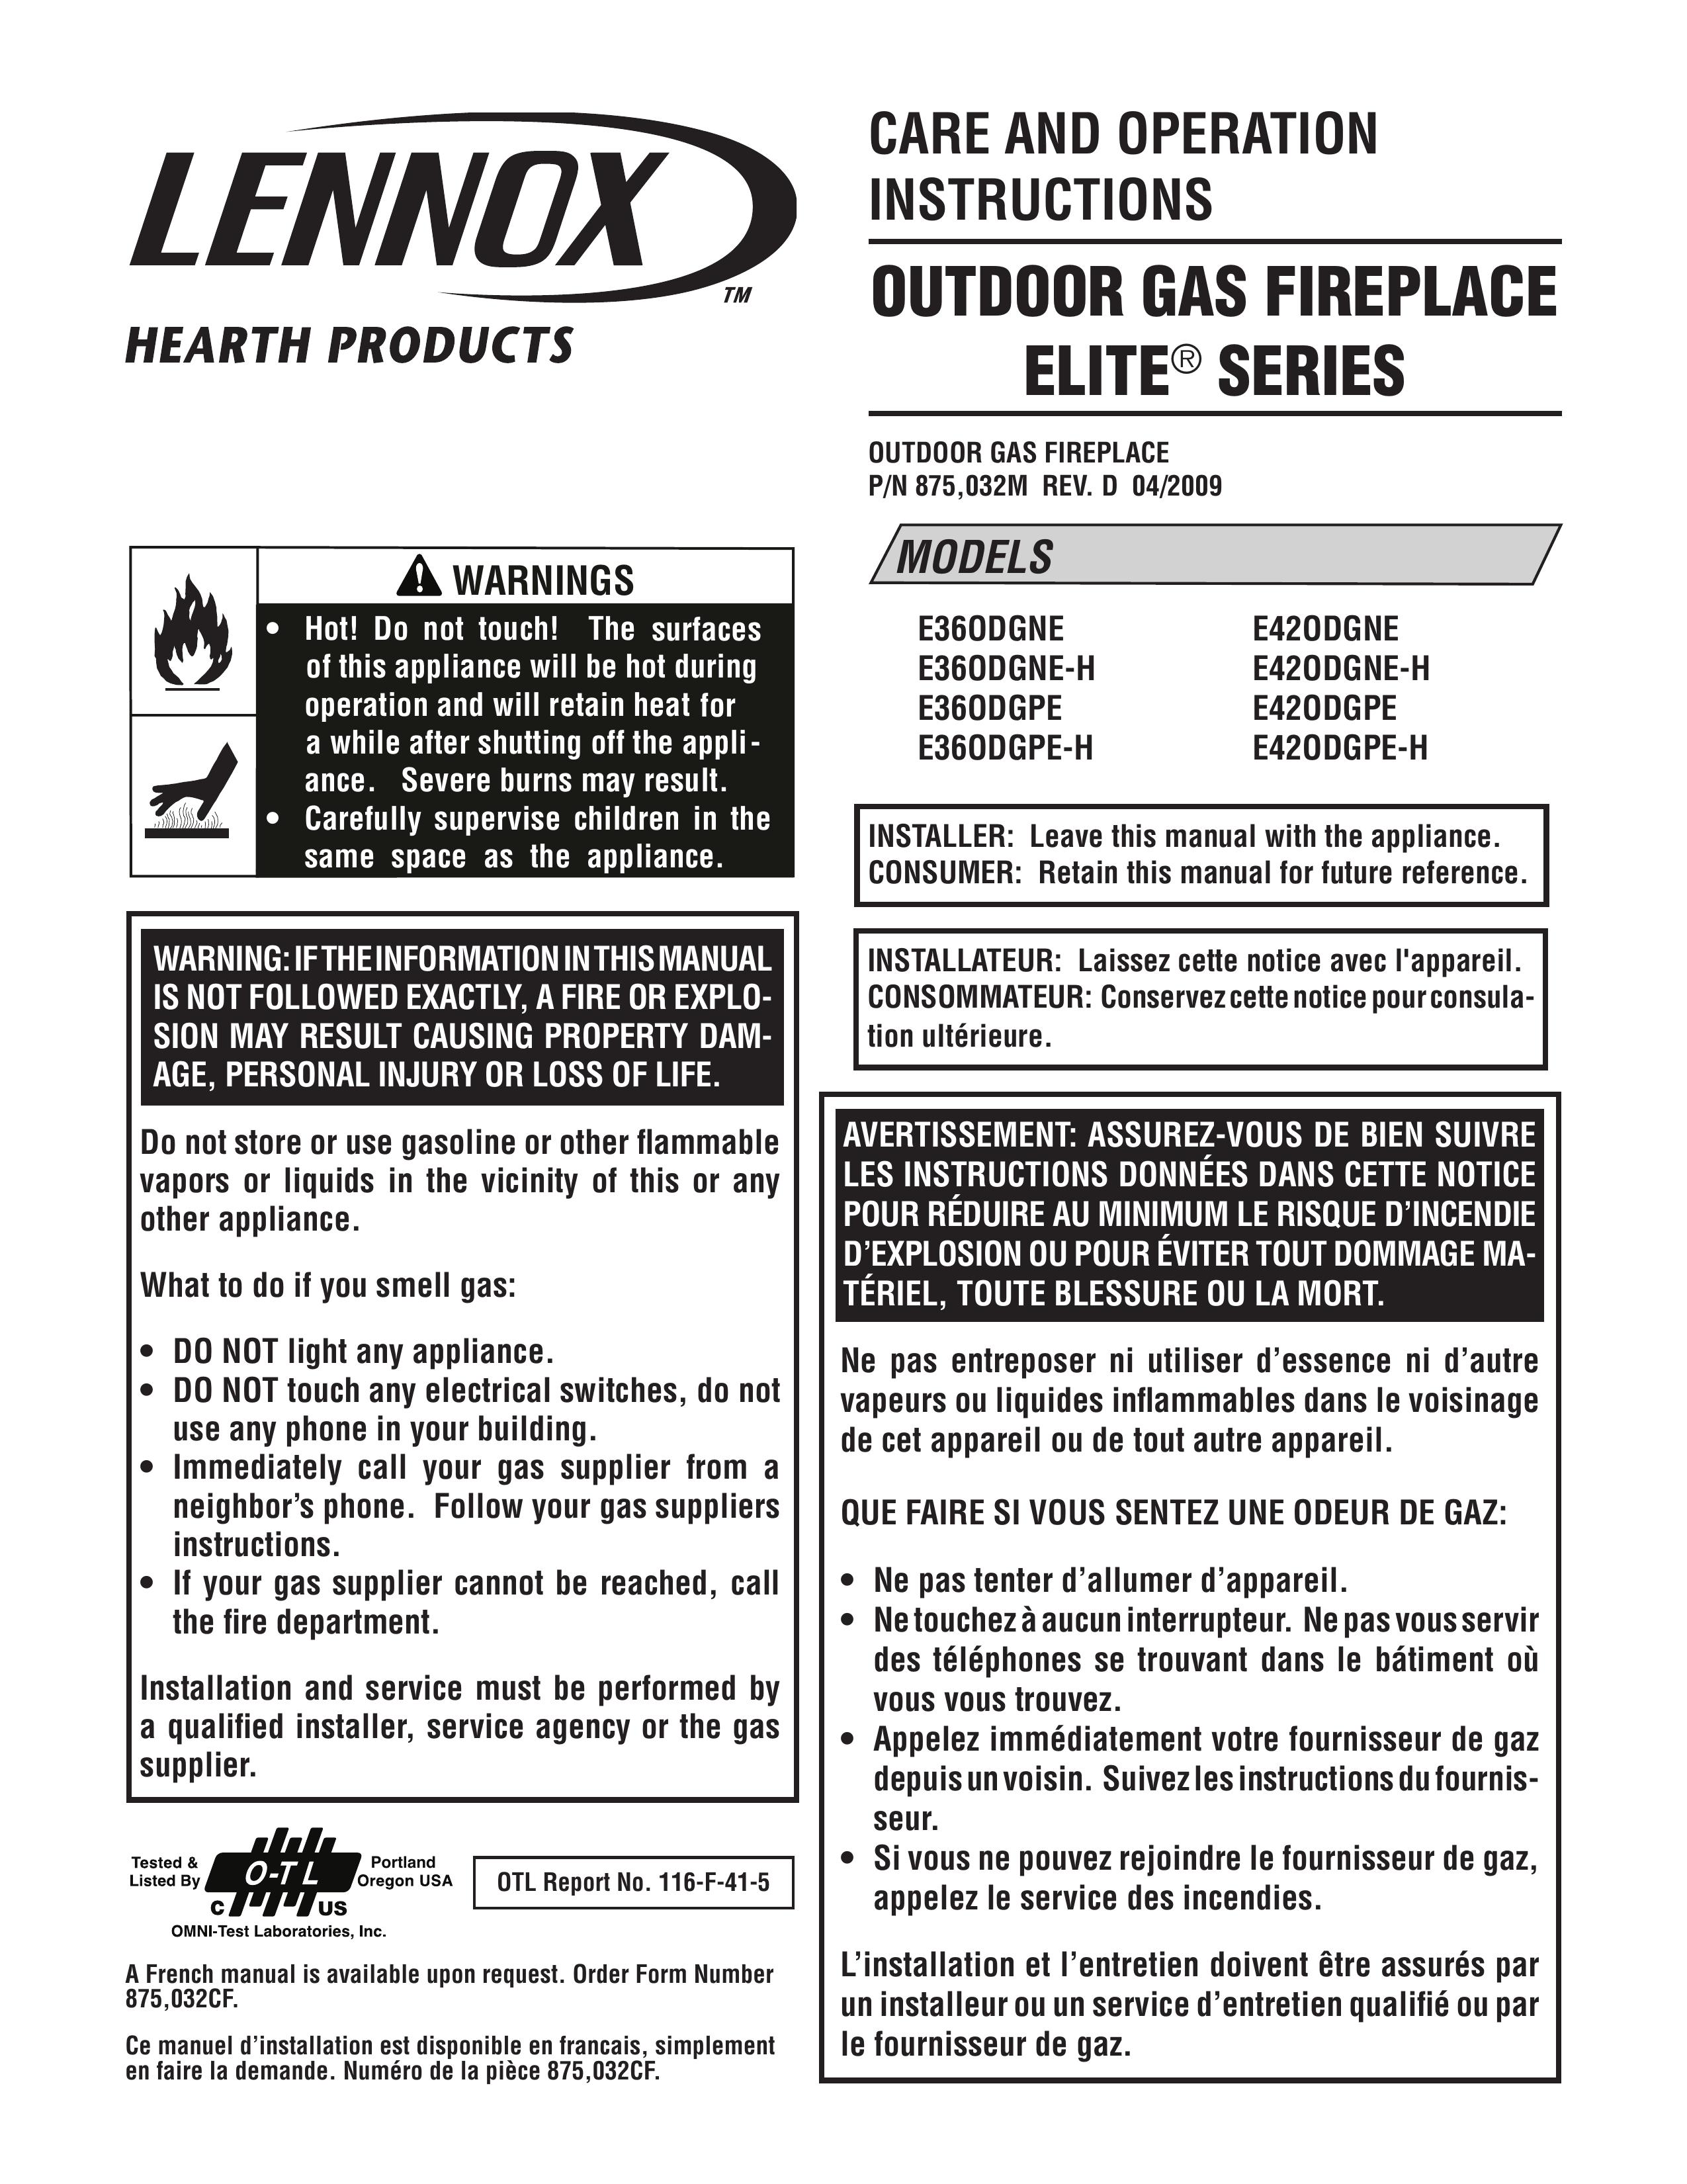 Lennox Hearth E36ODGPE-H Outdoor Fireplace User Manual